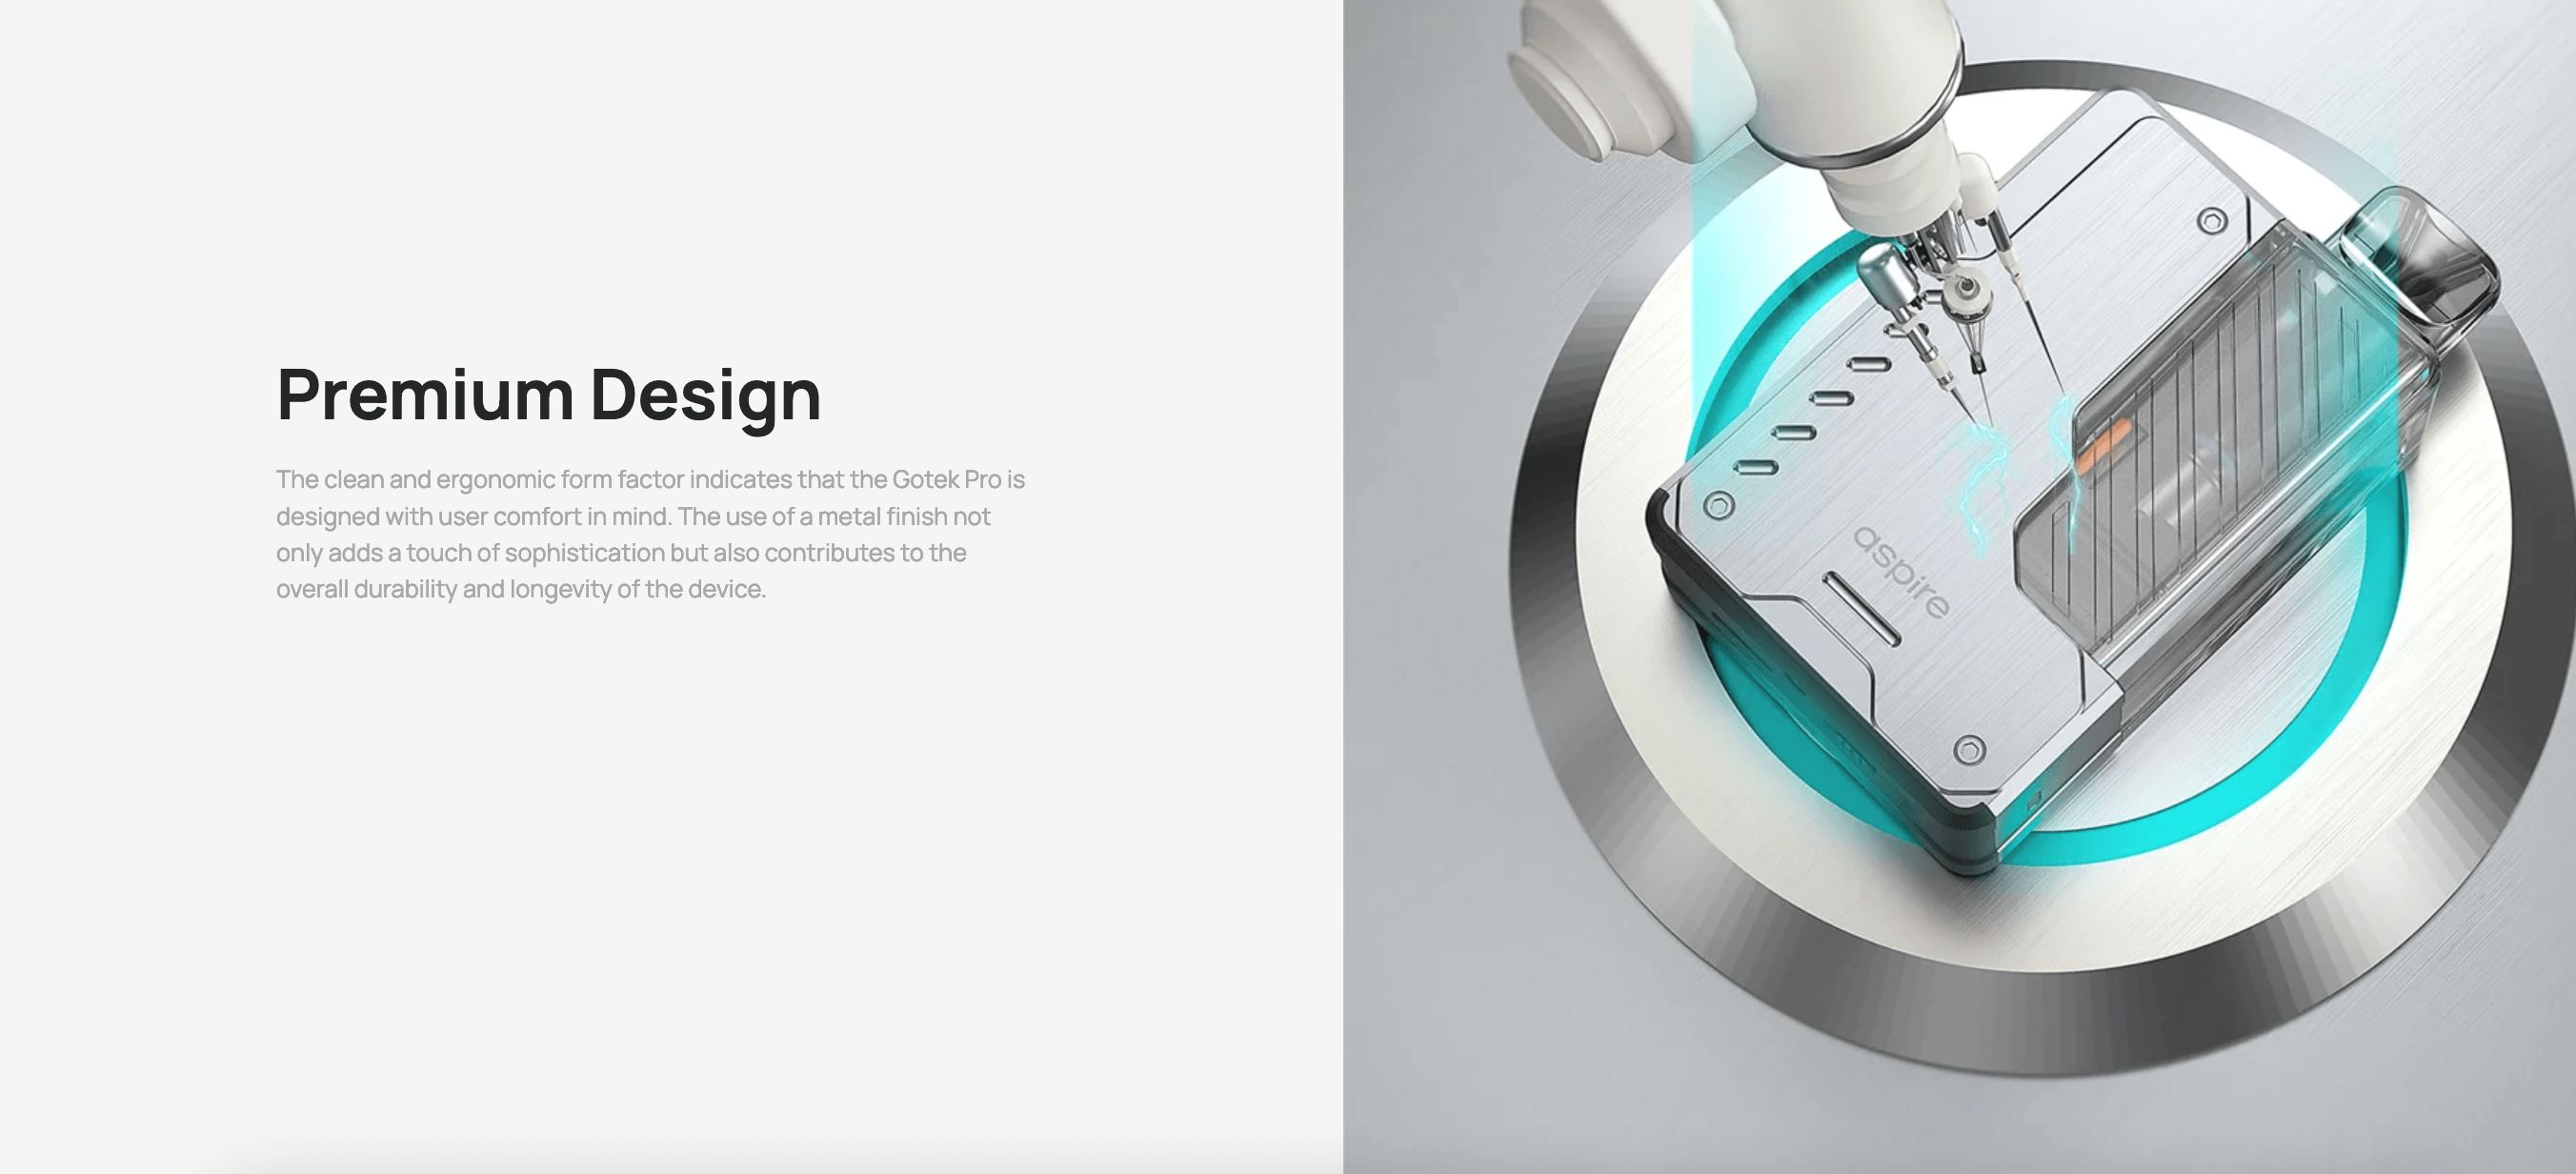 Aspire Gotek Pro Kit - Premium Design